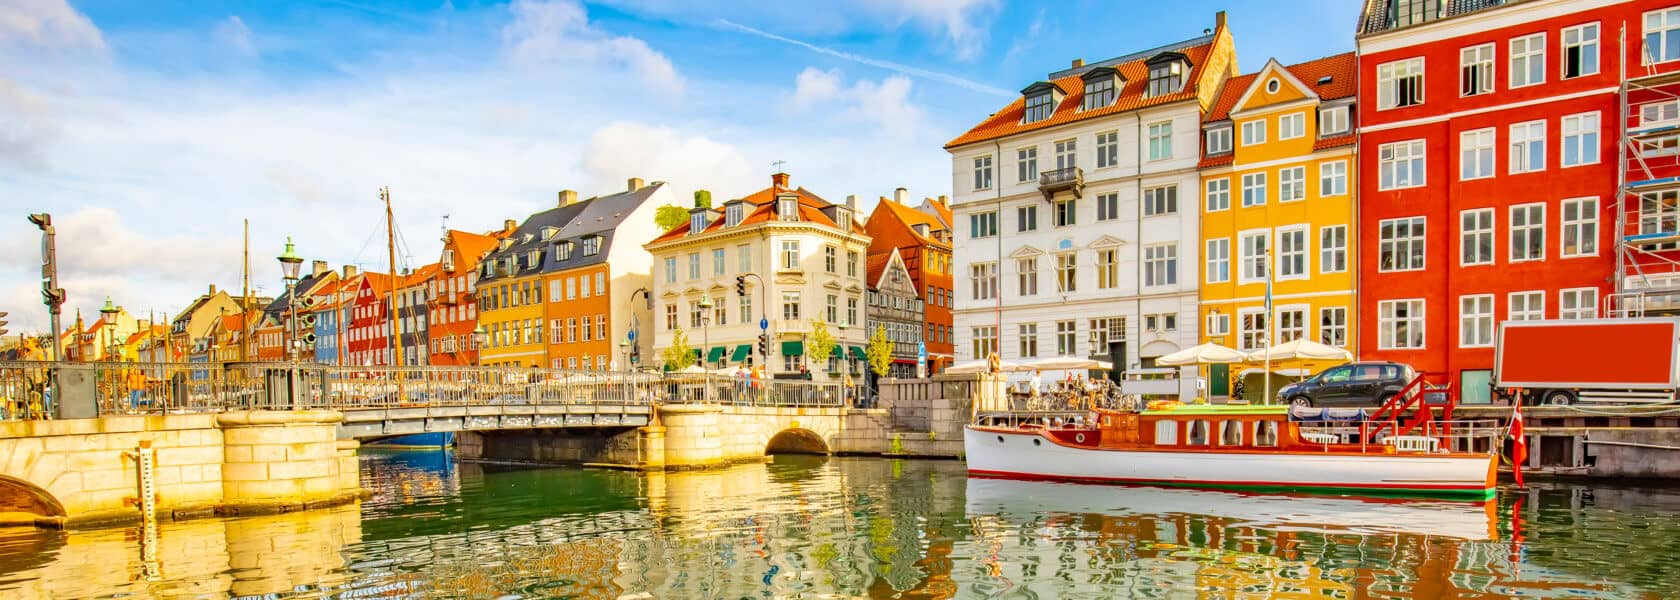 The Best Cities To Visit In Scandinavia